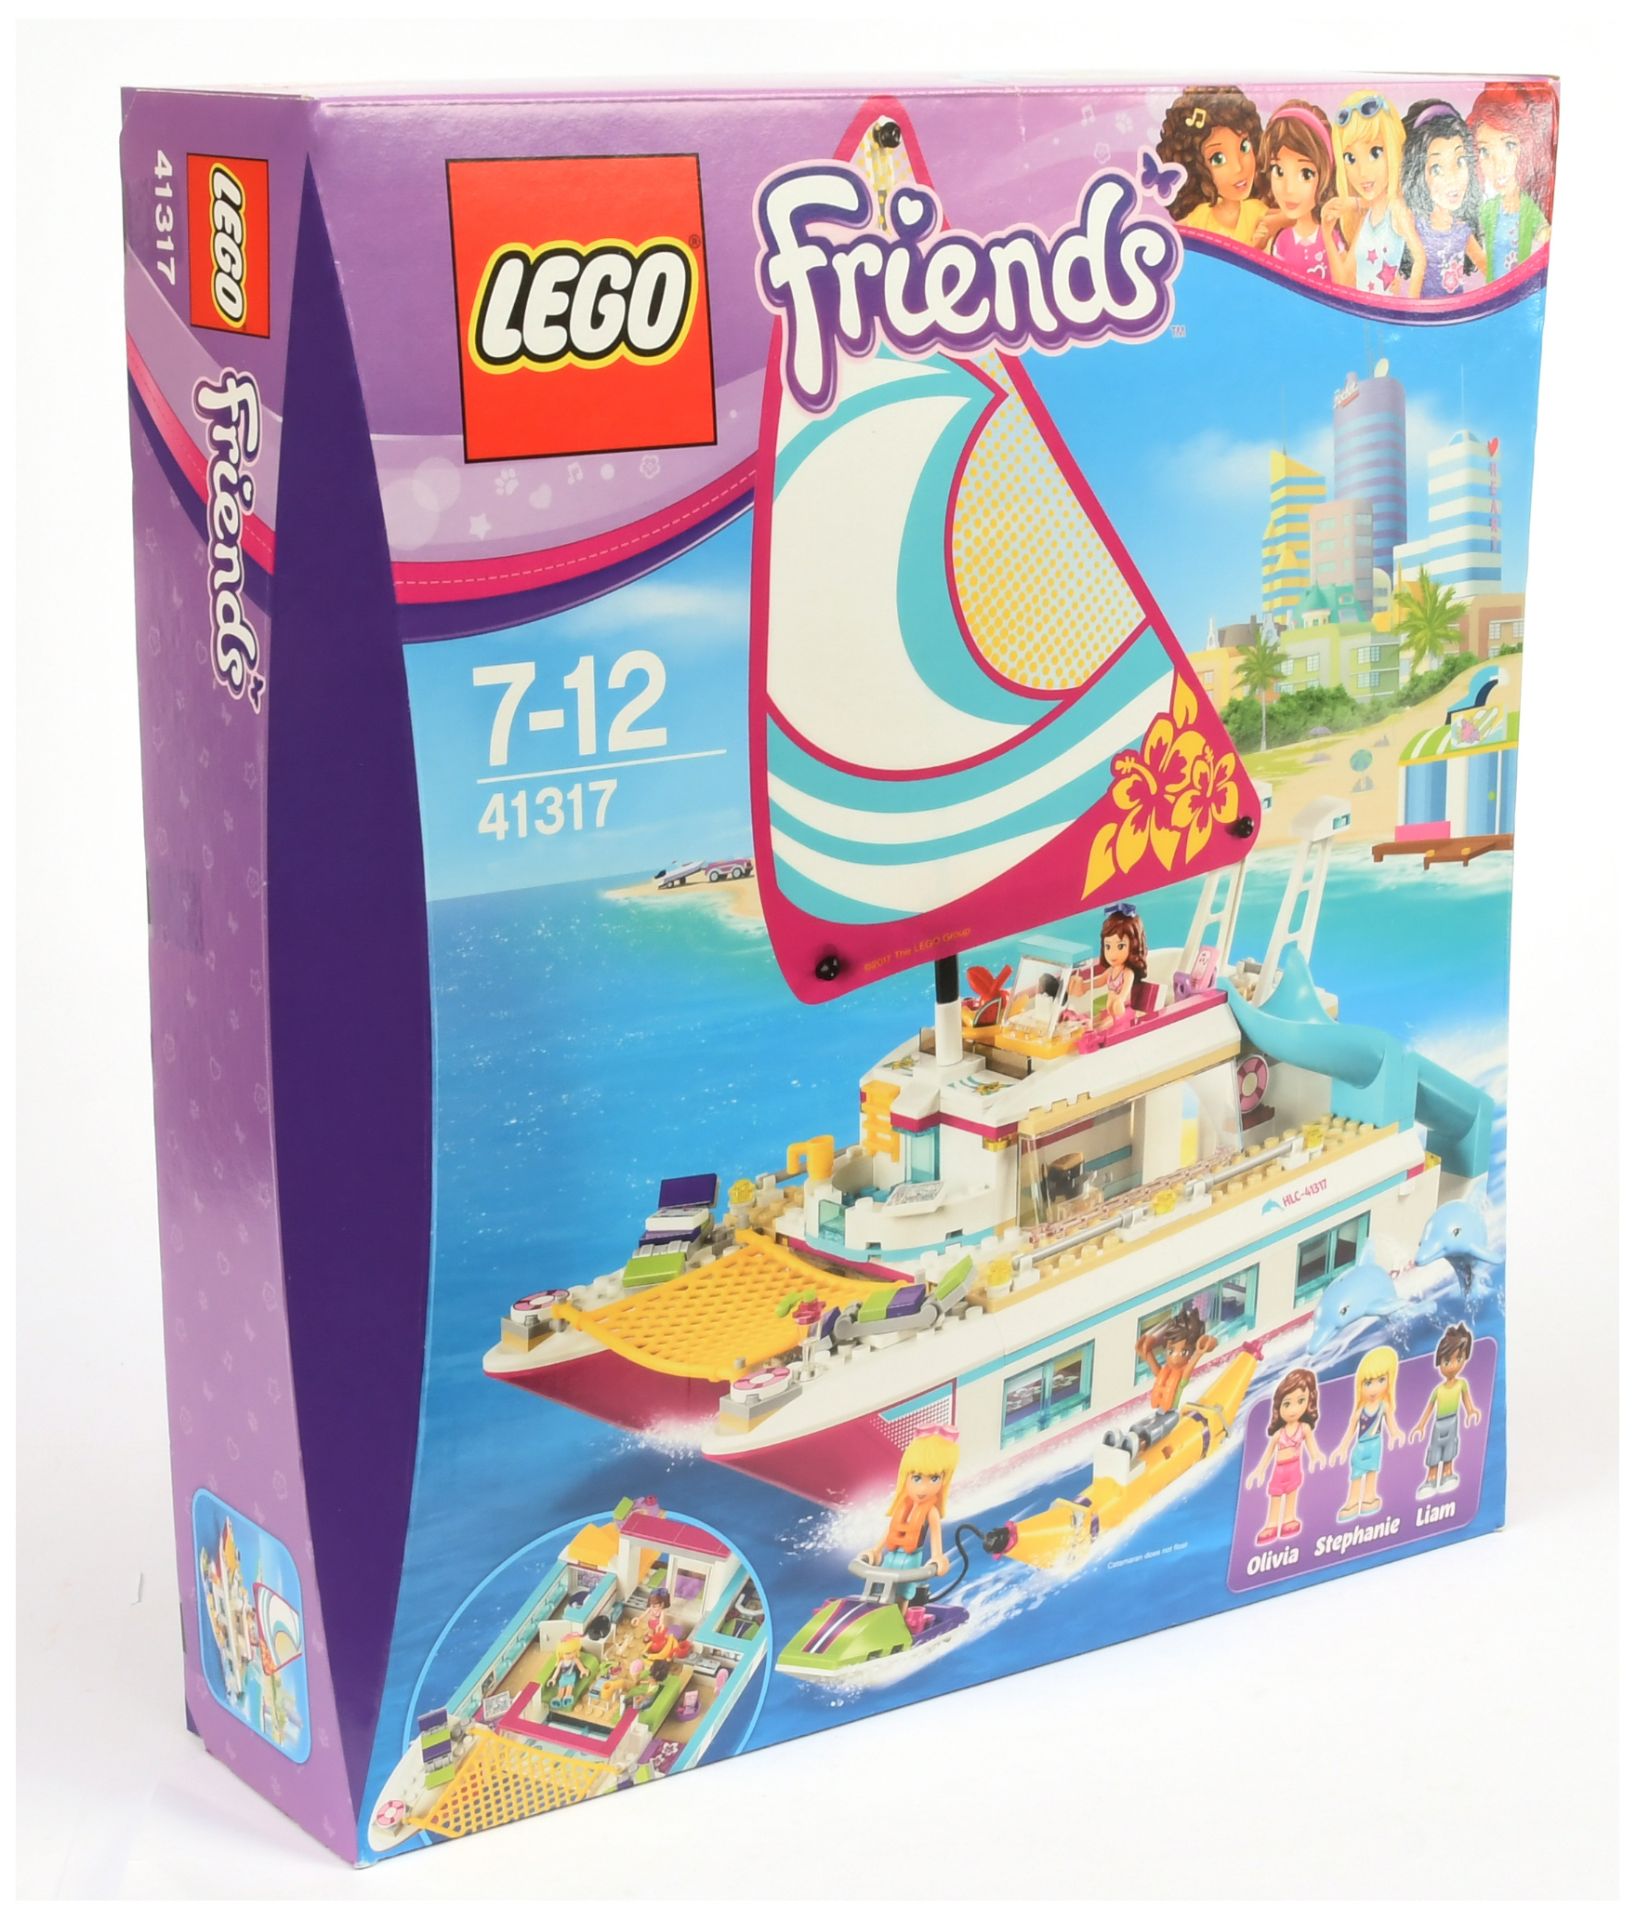 Lego Freiends Sunshine Catamaran set #41317, unopened sealed packaging. EX SHOP STOCK